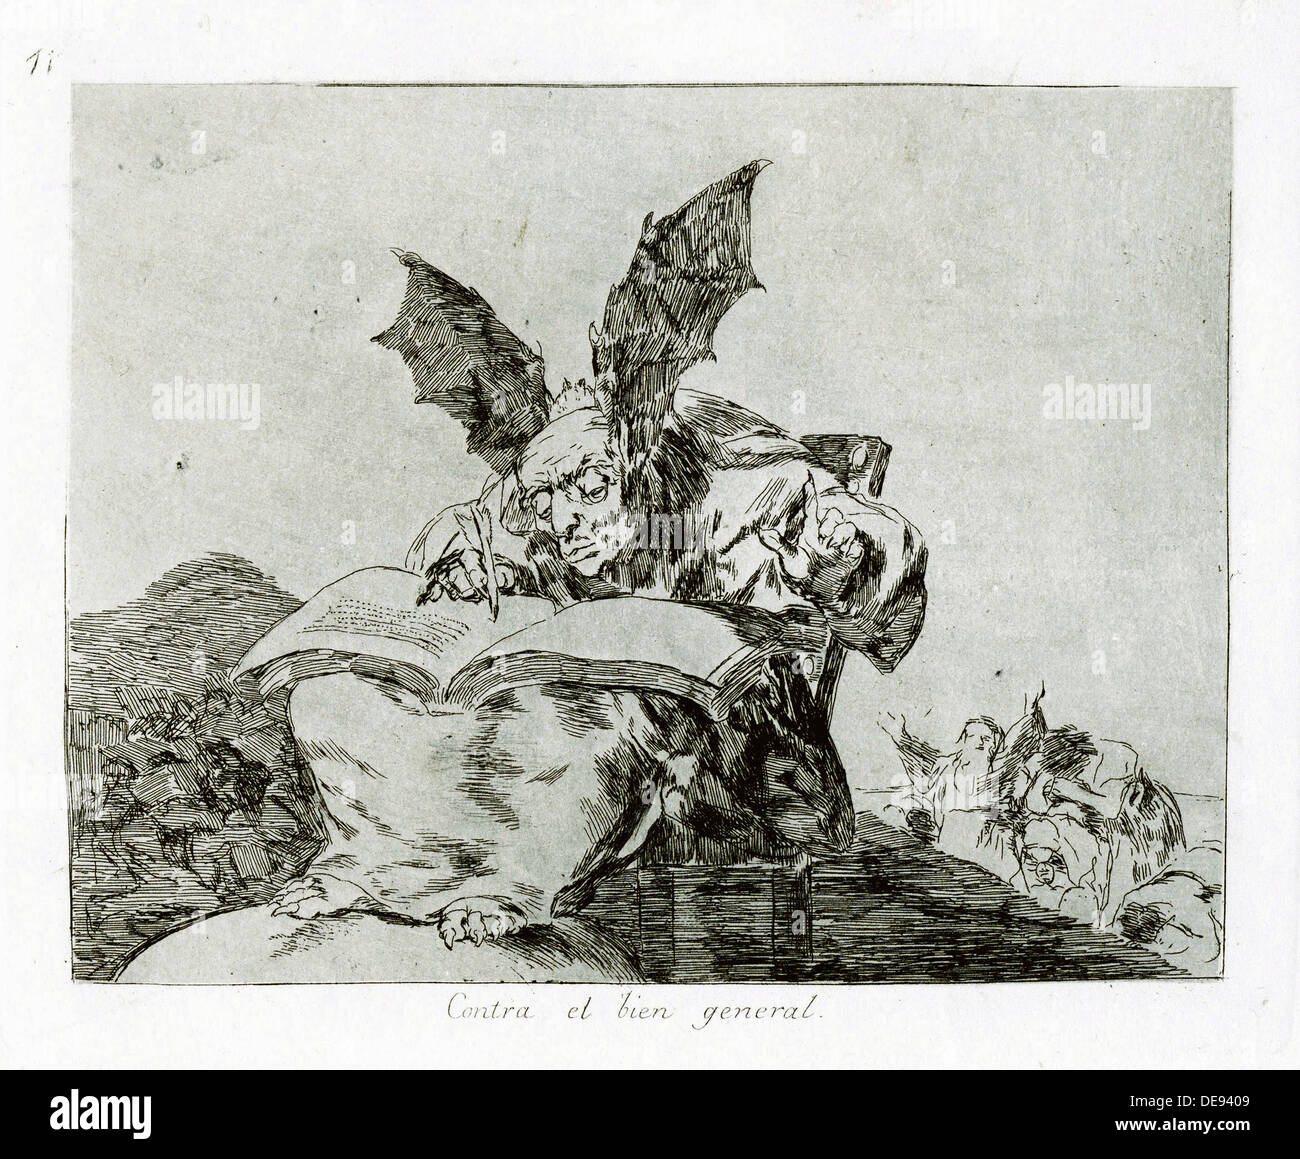 Contra el bien général (contre le bien commun). 71 de la plaque des désastres de la guerre (Los Desastros de la Guerra), 1810-1820. Artiste : Goya, Francisco, Banque D'Images